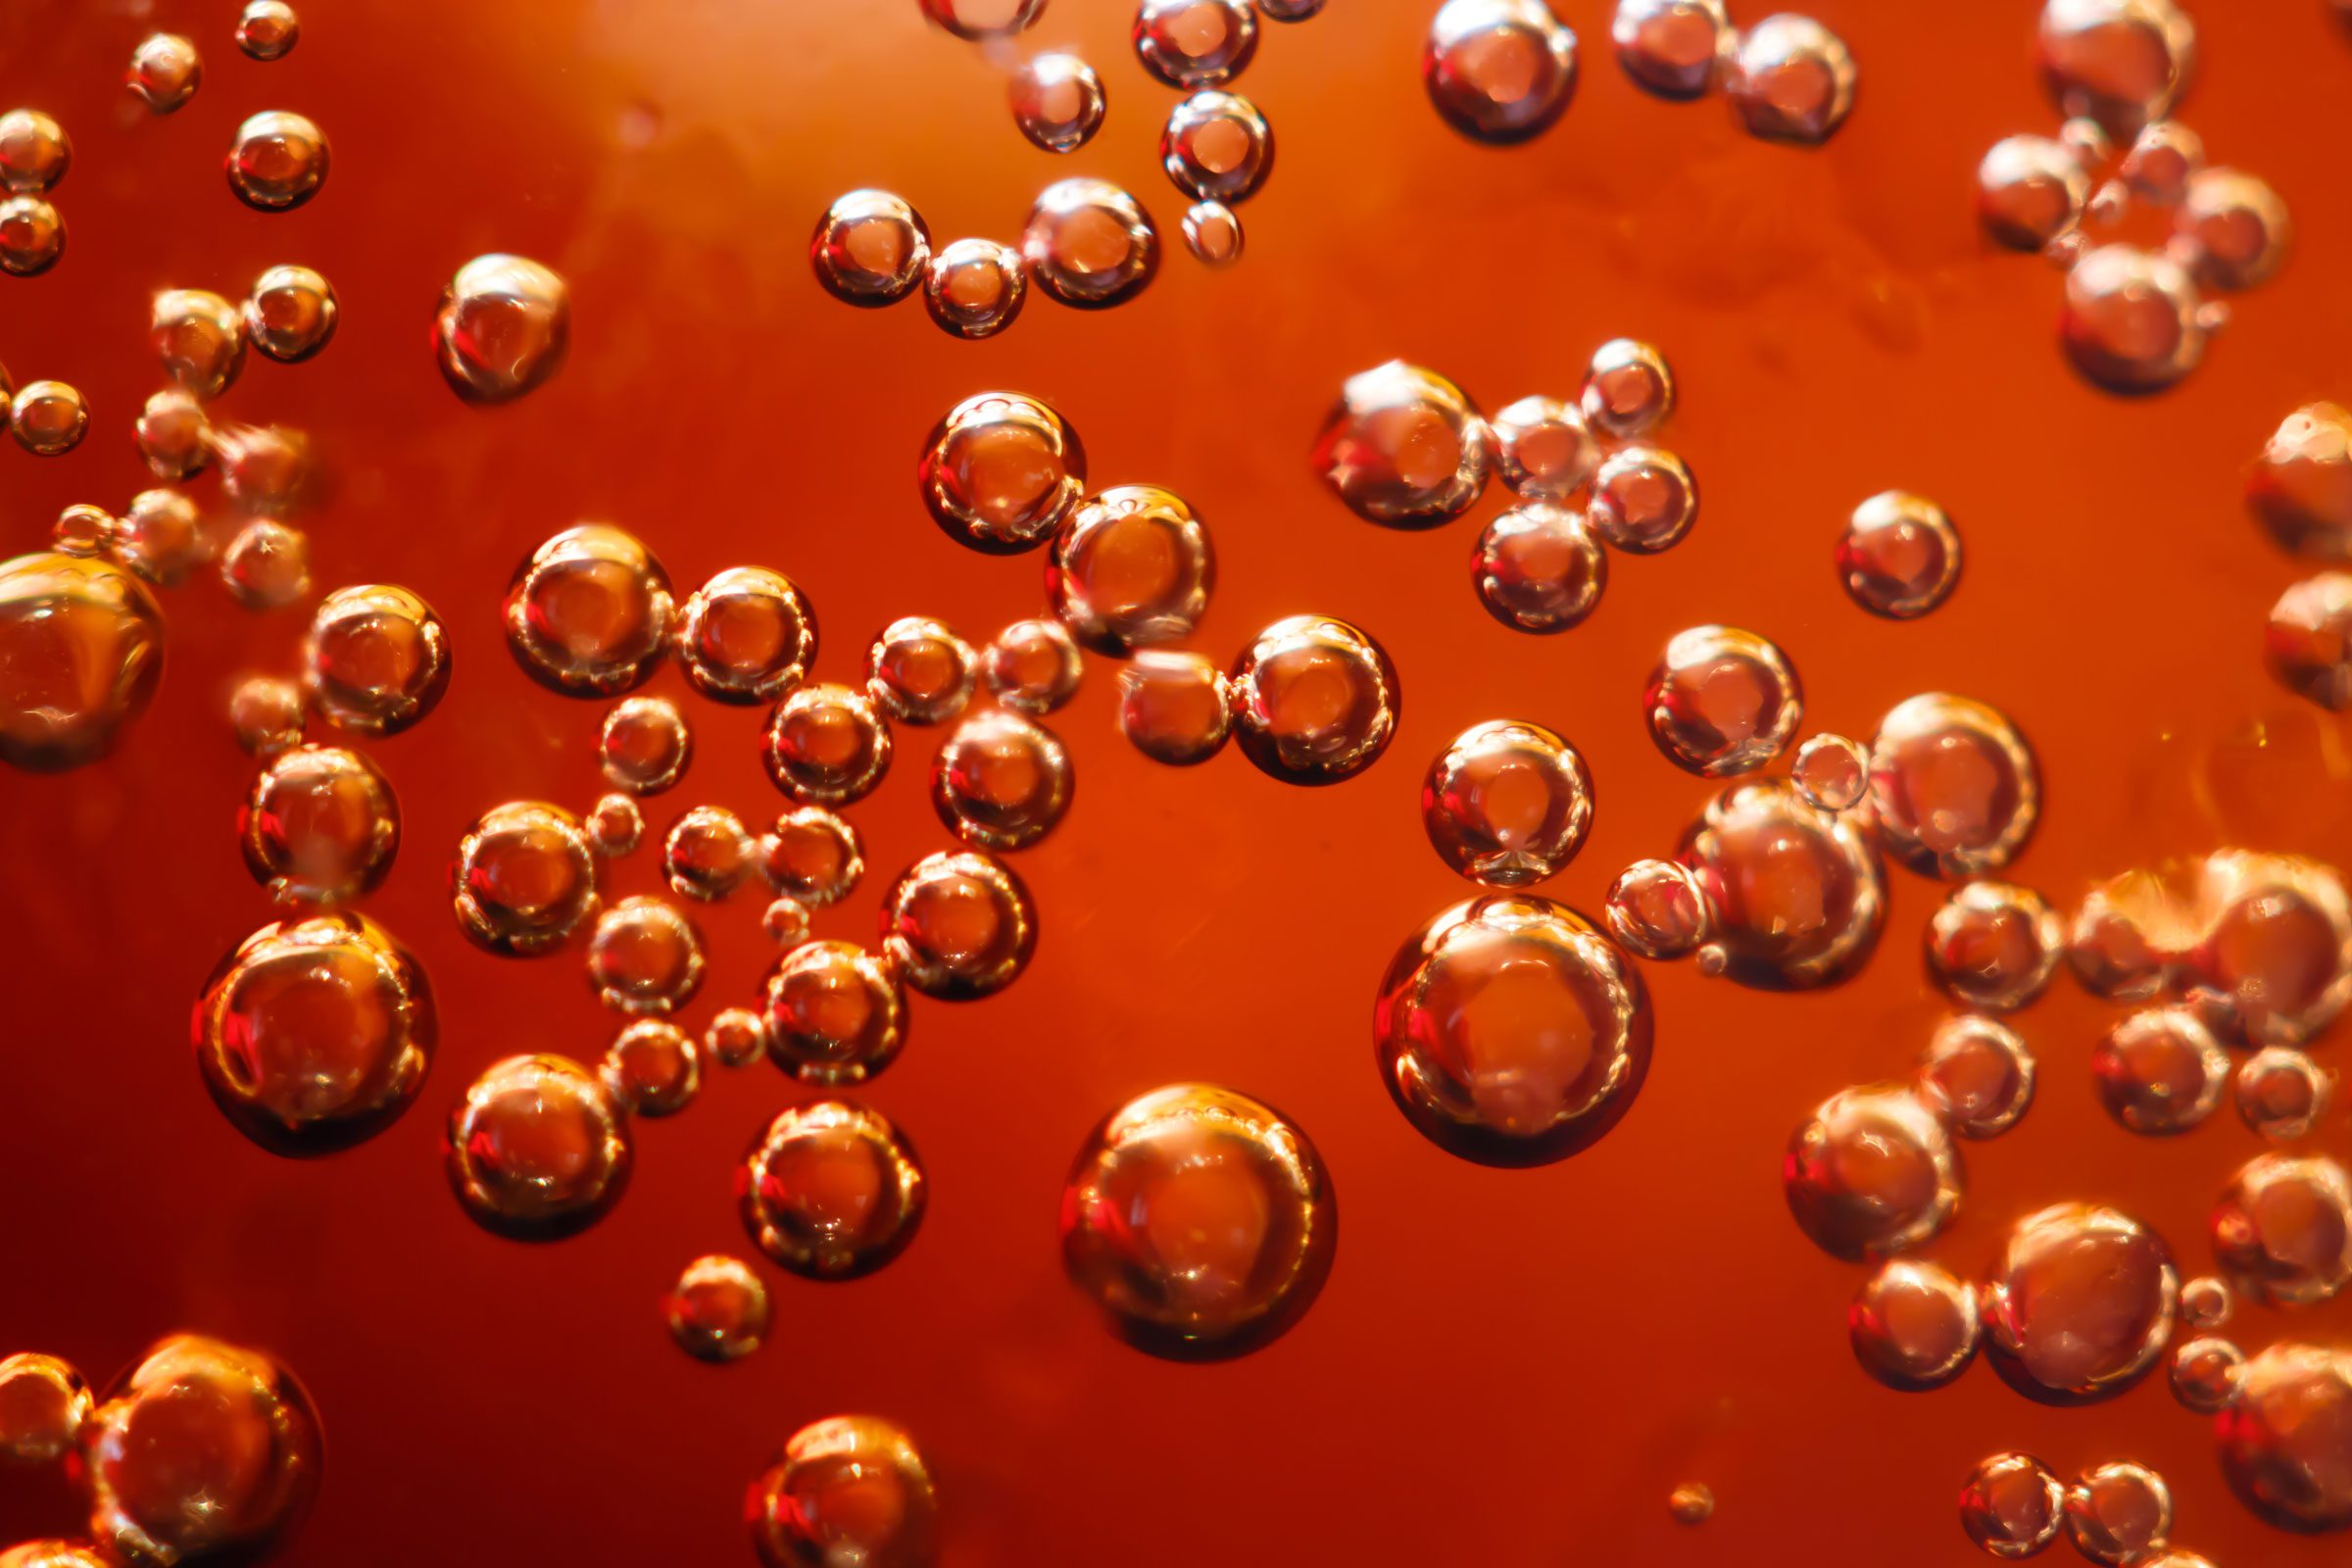 fizzy orange beer bubbles close up